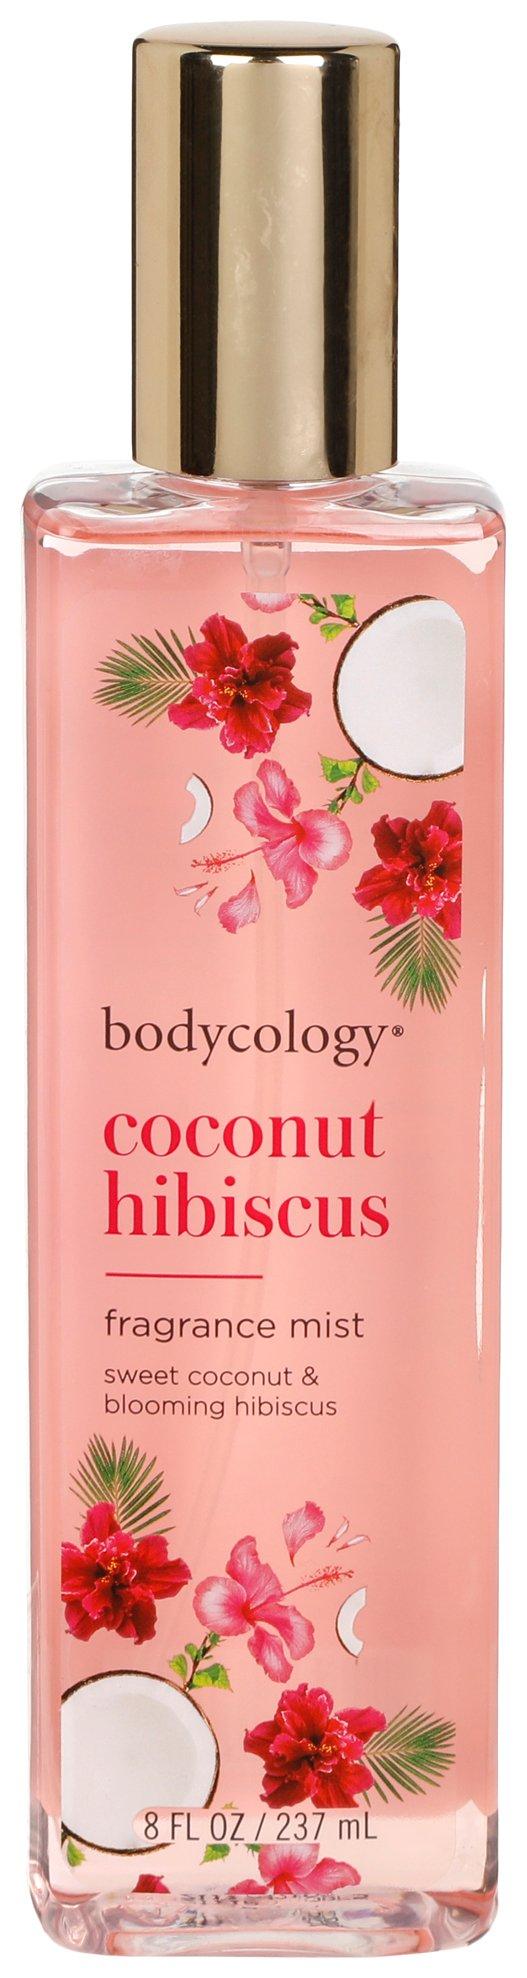 Bodycology Coconut Hibiscus Fragrance Mist 8 fl. oz.